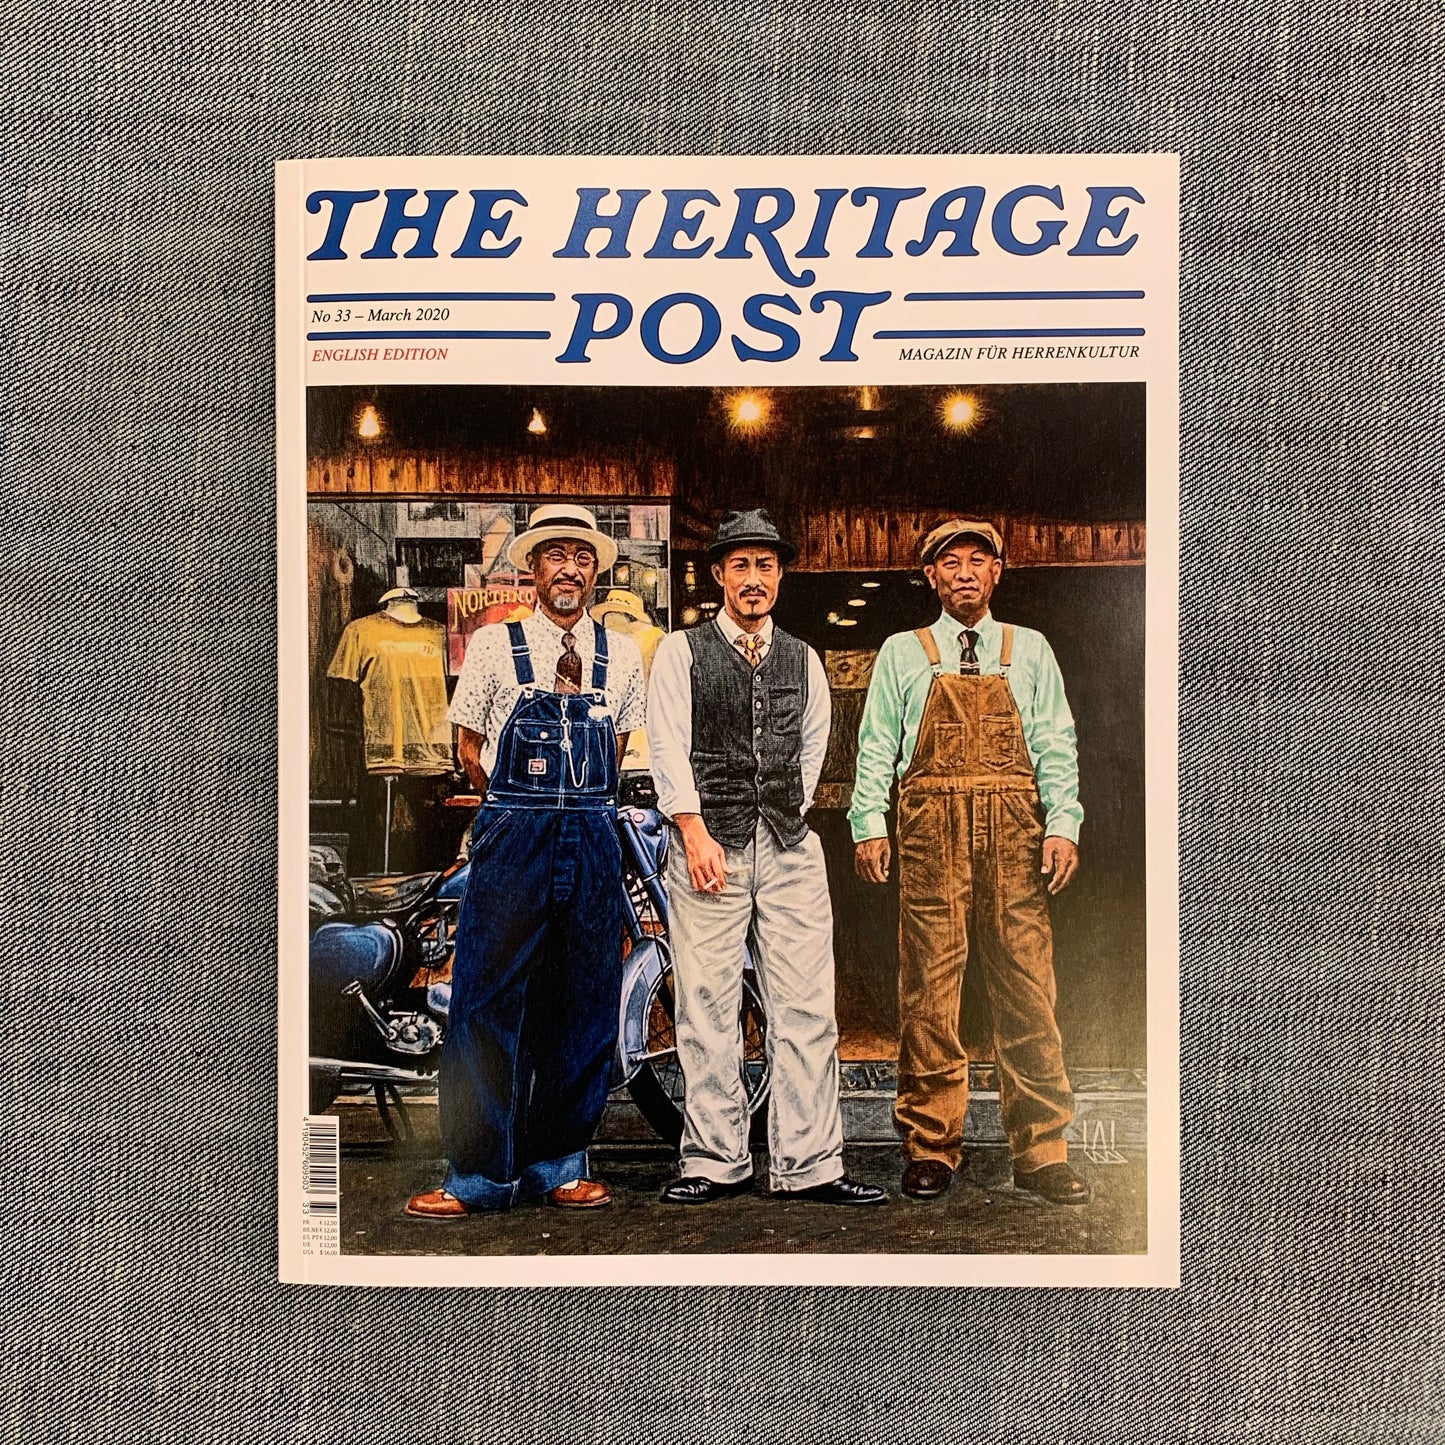 The Heritage Post - vol 33